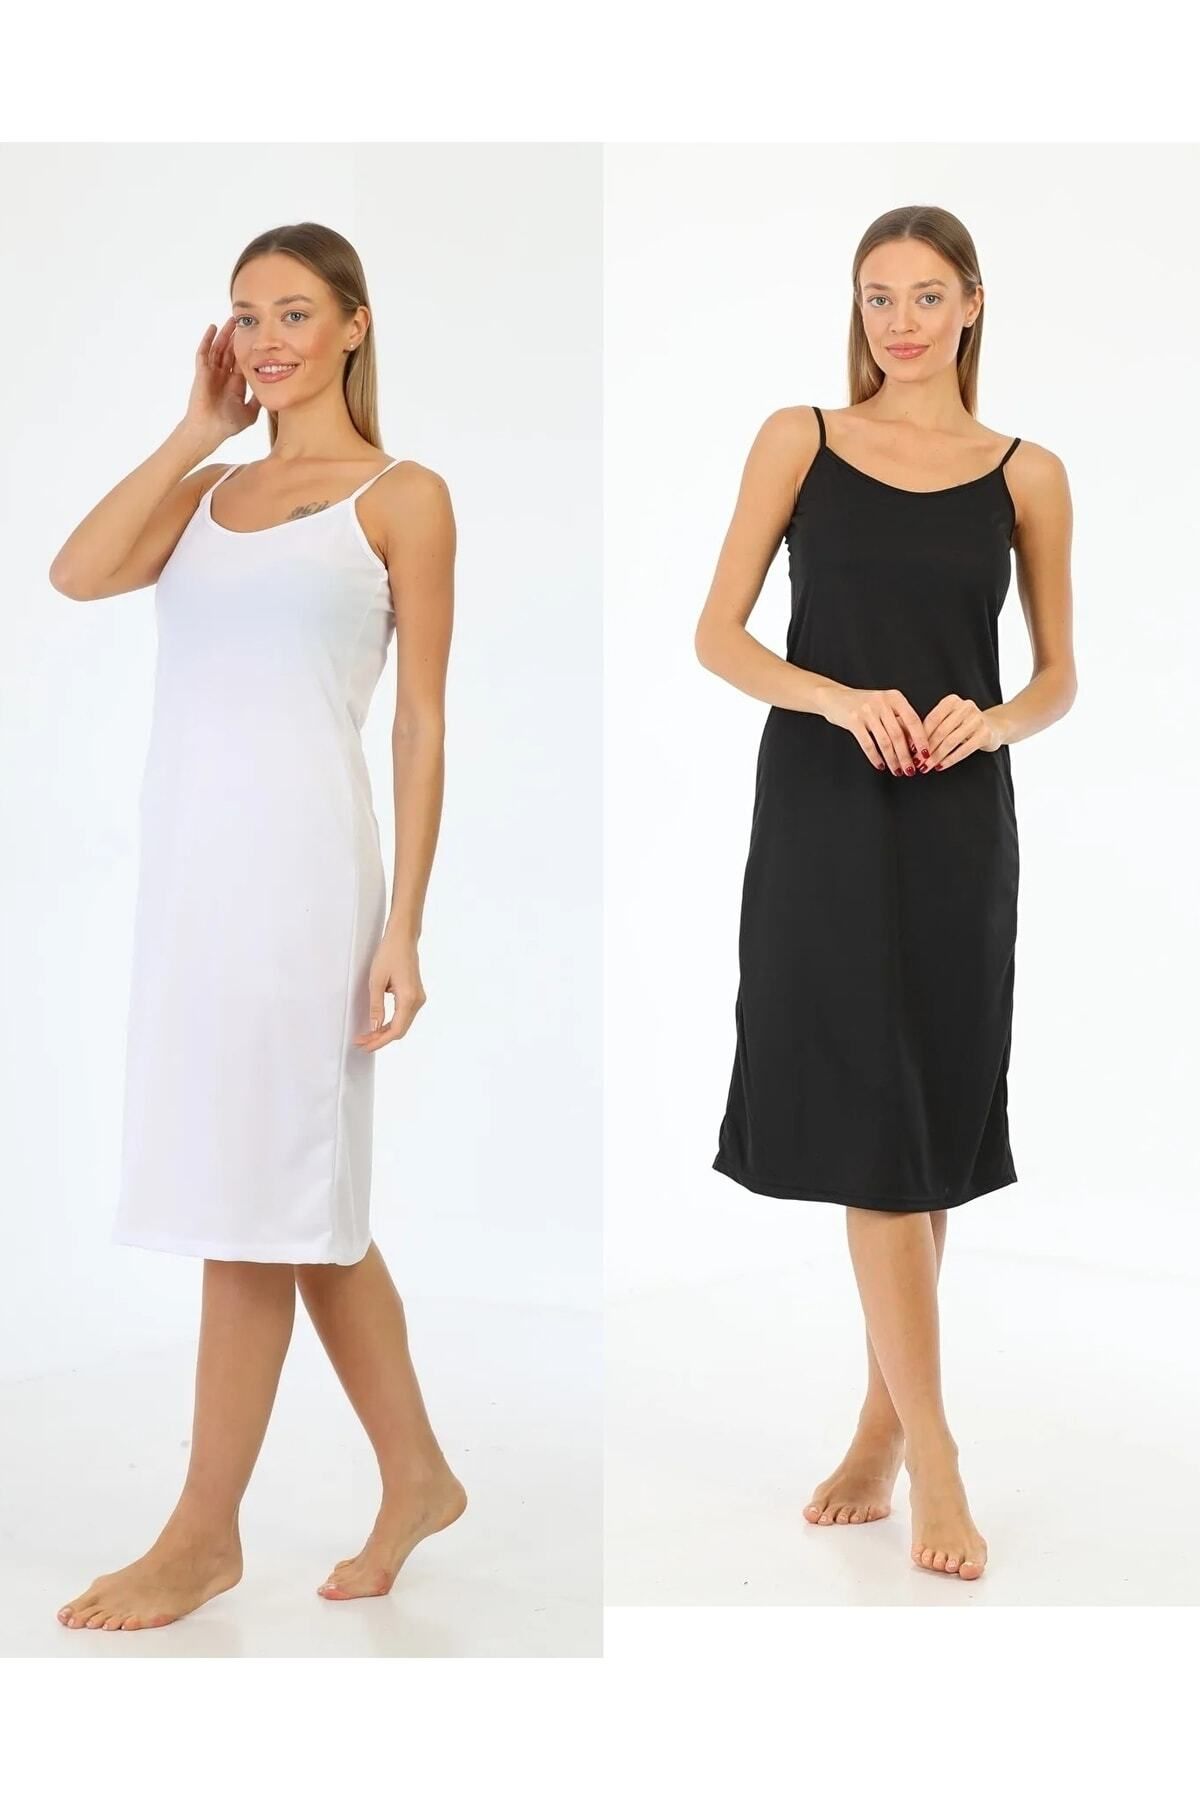 medipek String Dress Lining Underwear Underskirt Black White Set